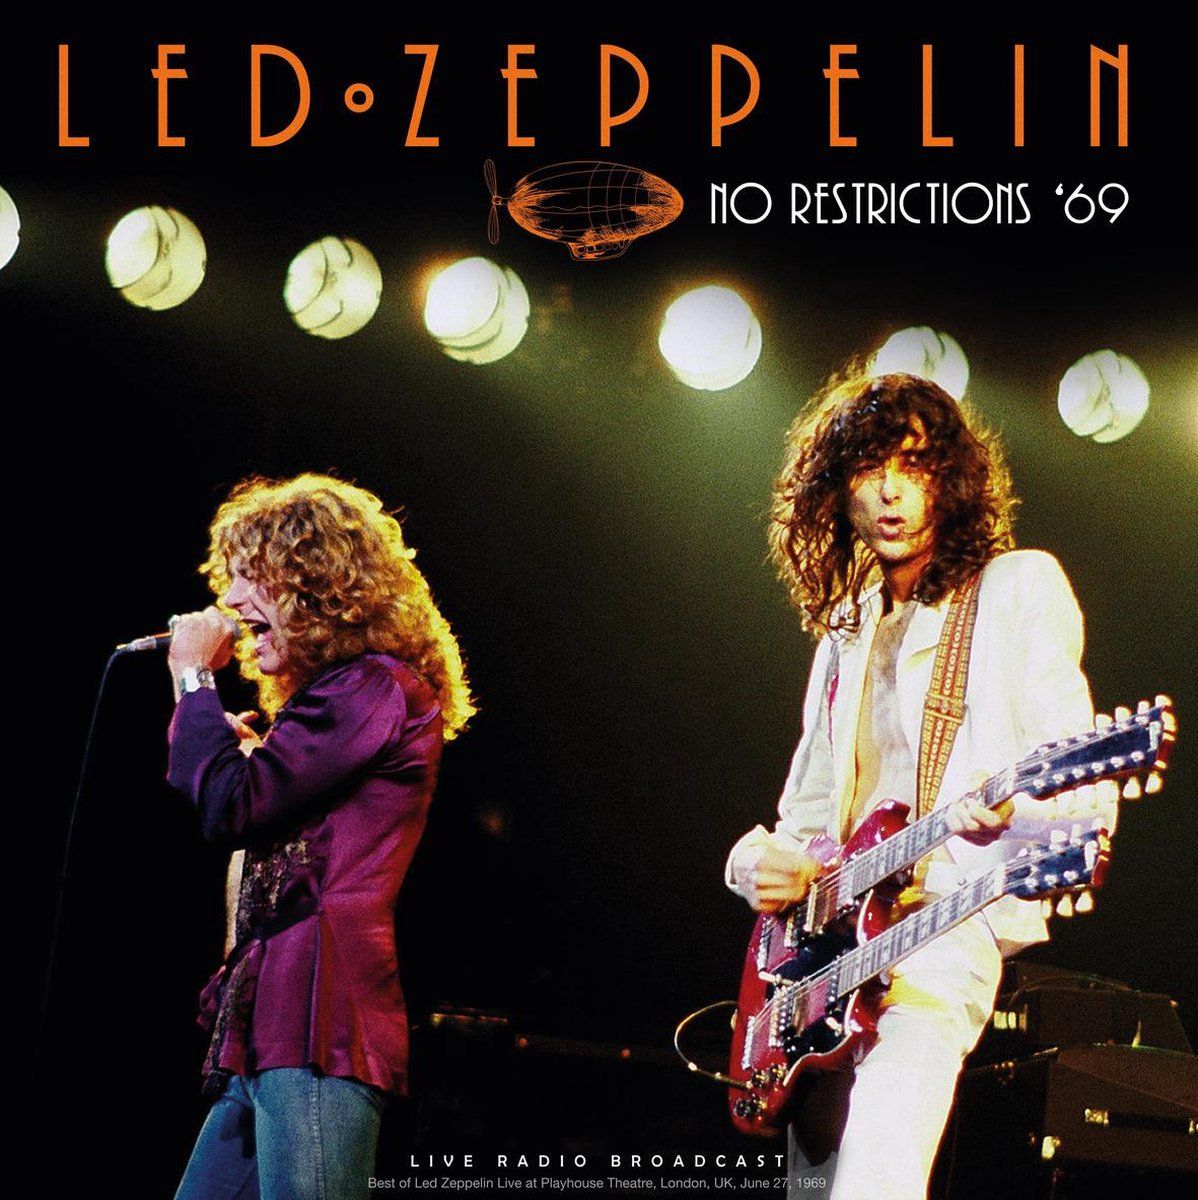 Led Zeppelin - No Restrictions '69: Live Radio Broadcast (180g) - Vinyl - New